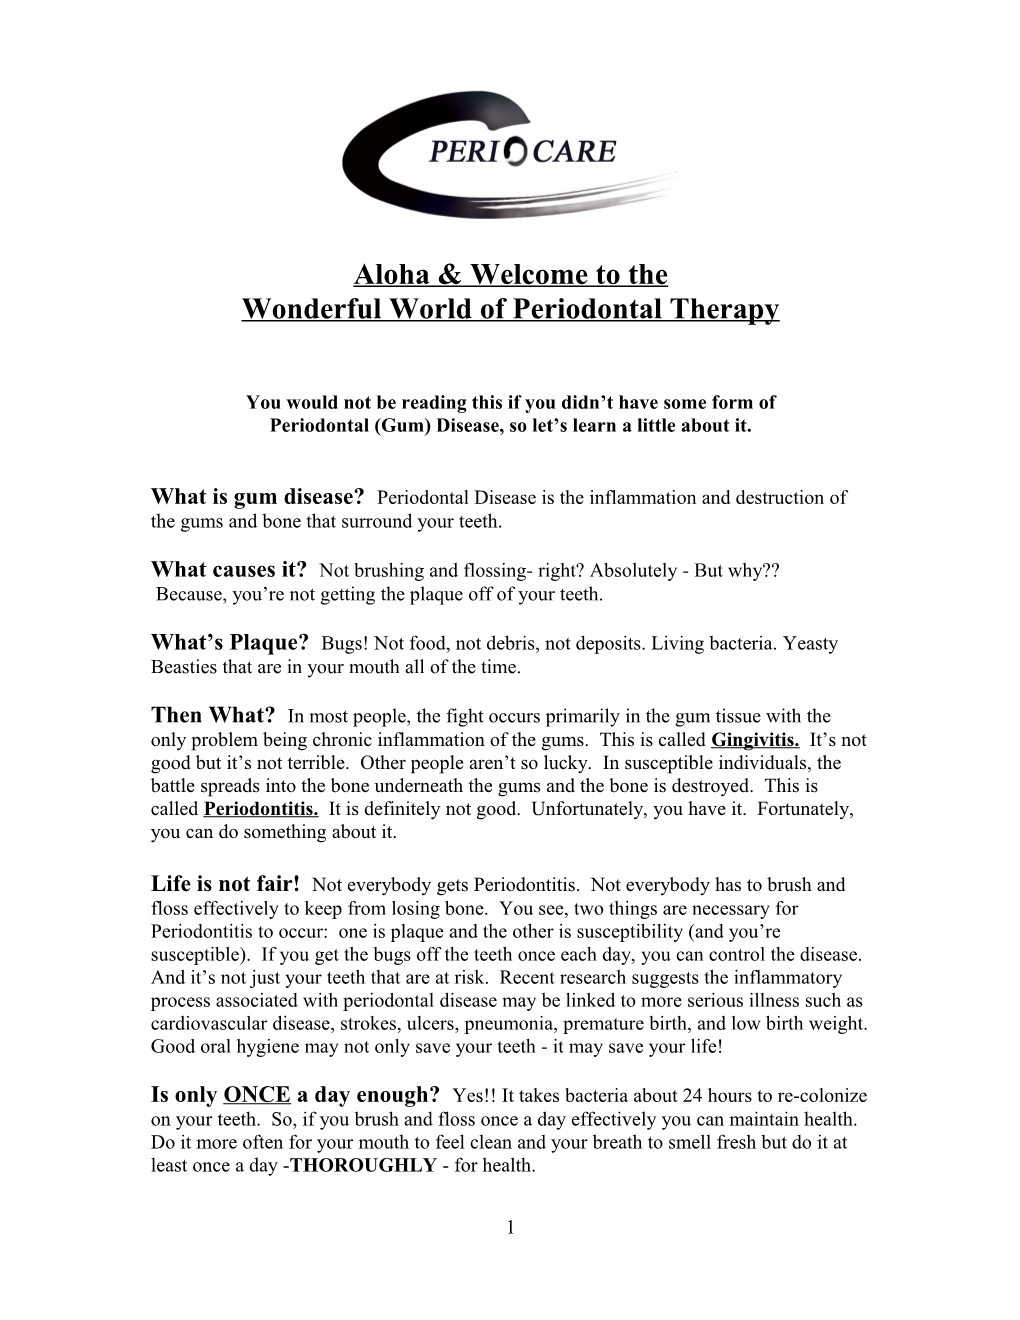 Wonderful World of Periodontal Therapy